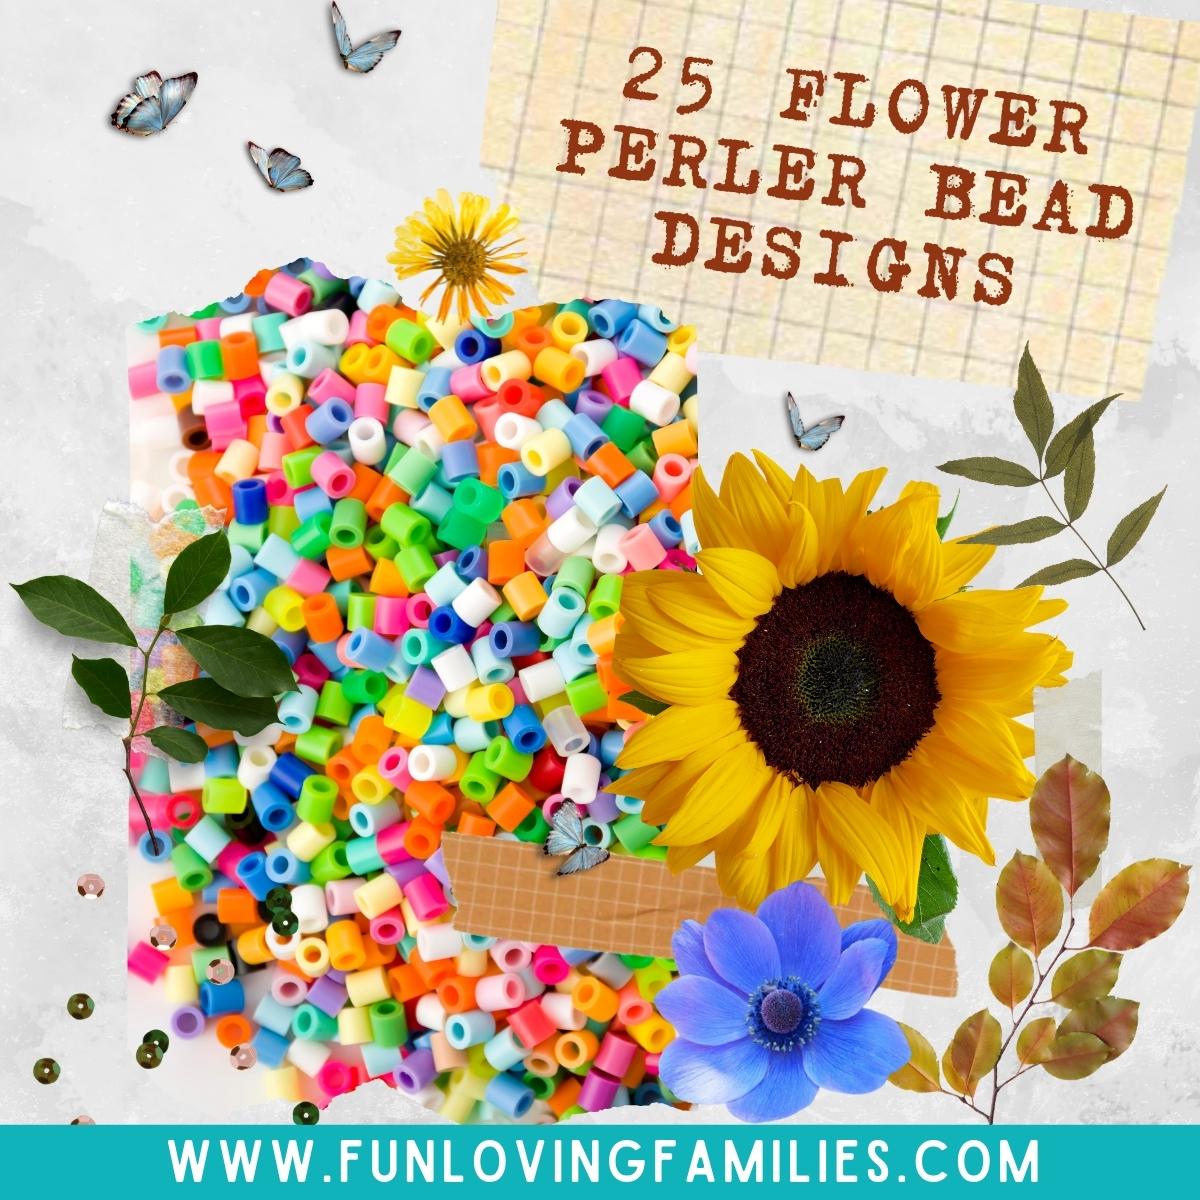 25 Flower Perler Bead Patterns, Designs and Ideas